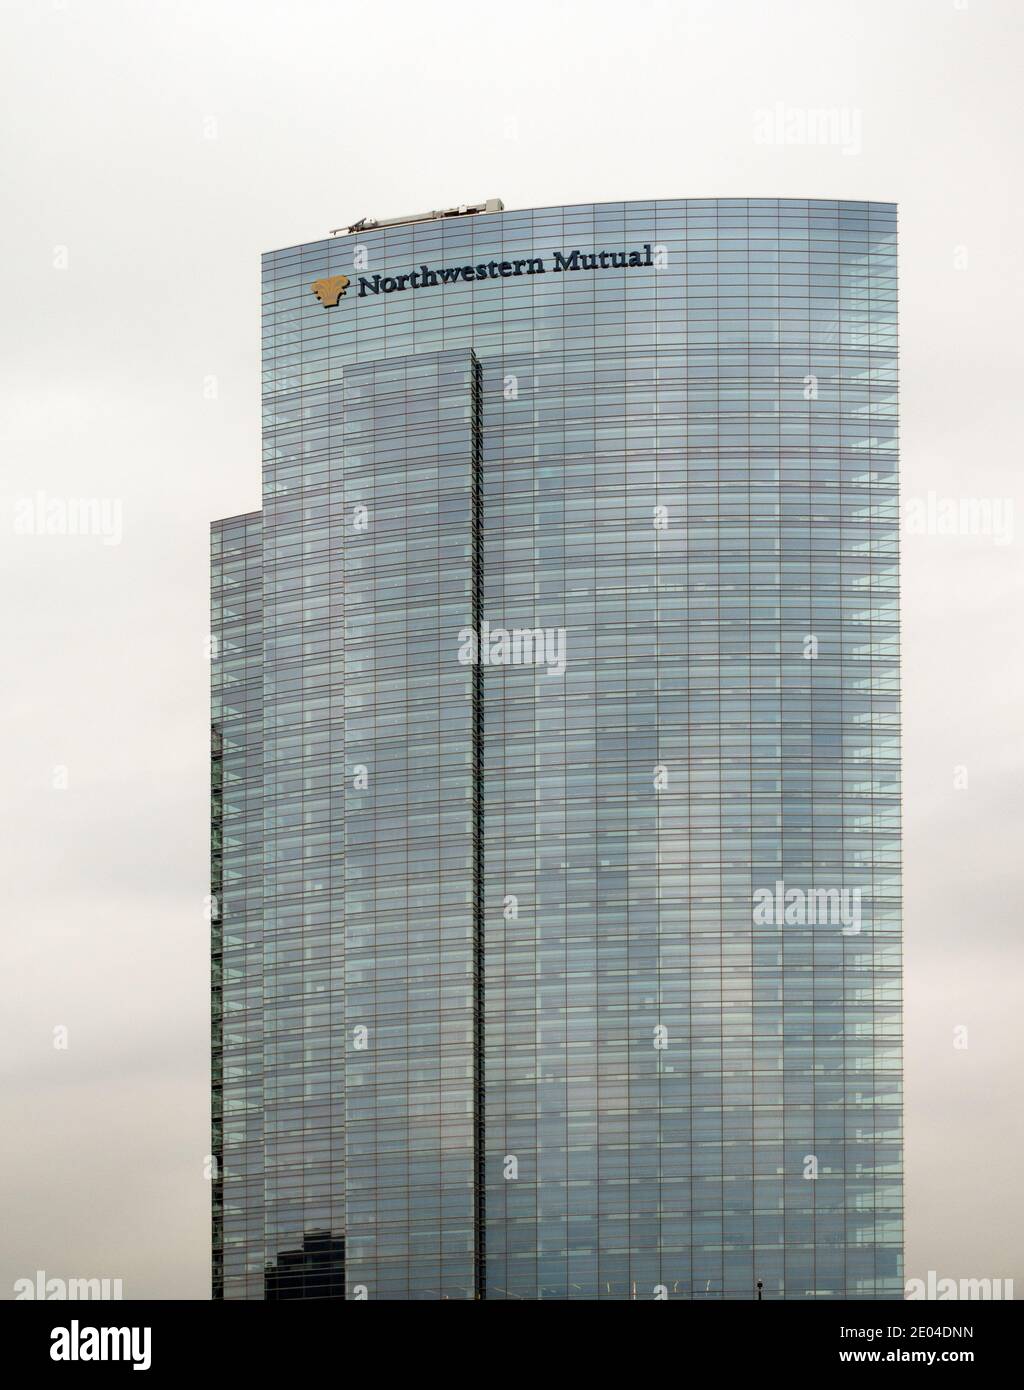 Northwestern Mutual life insurance company building Milwaukee WI Stock Photo